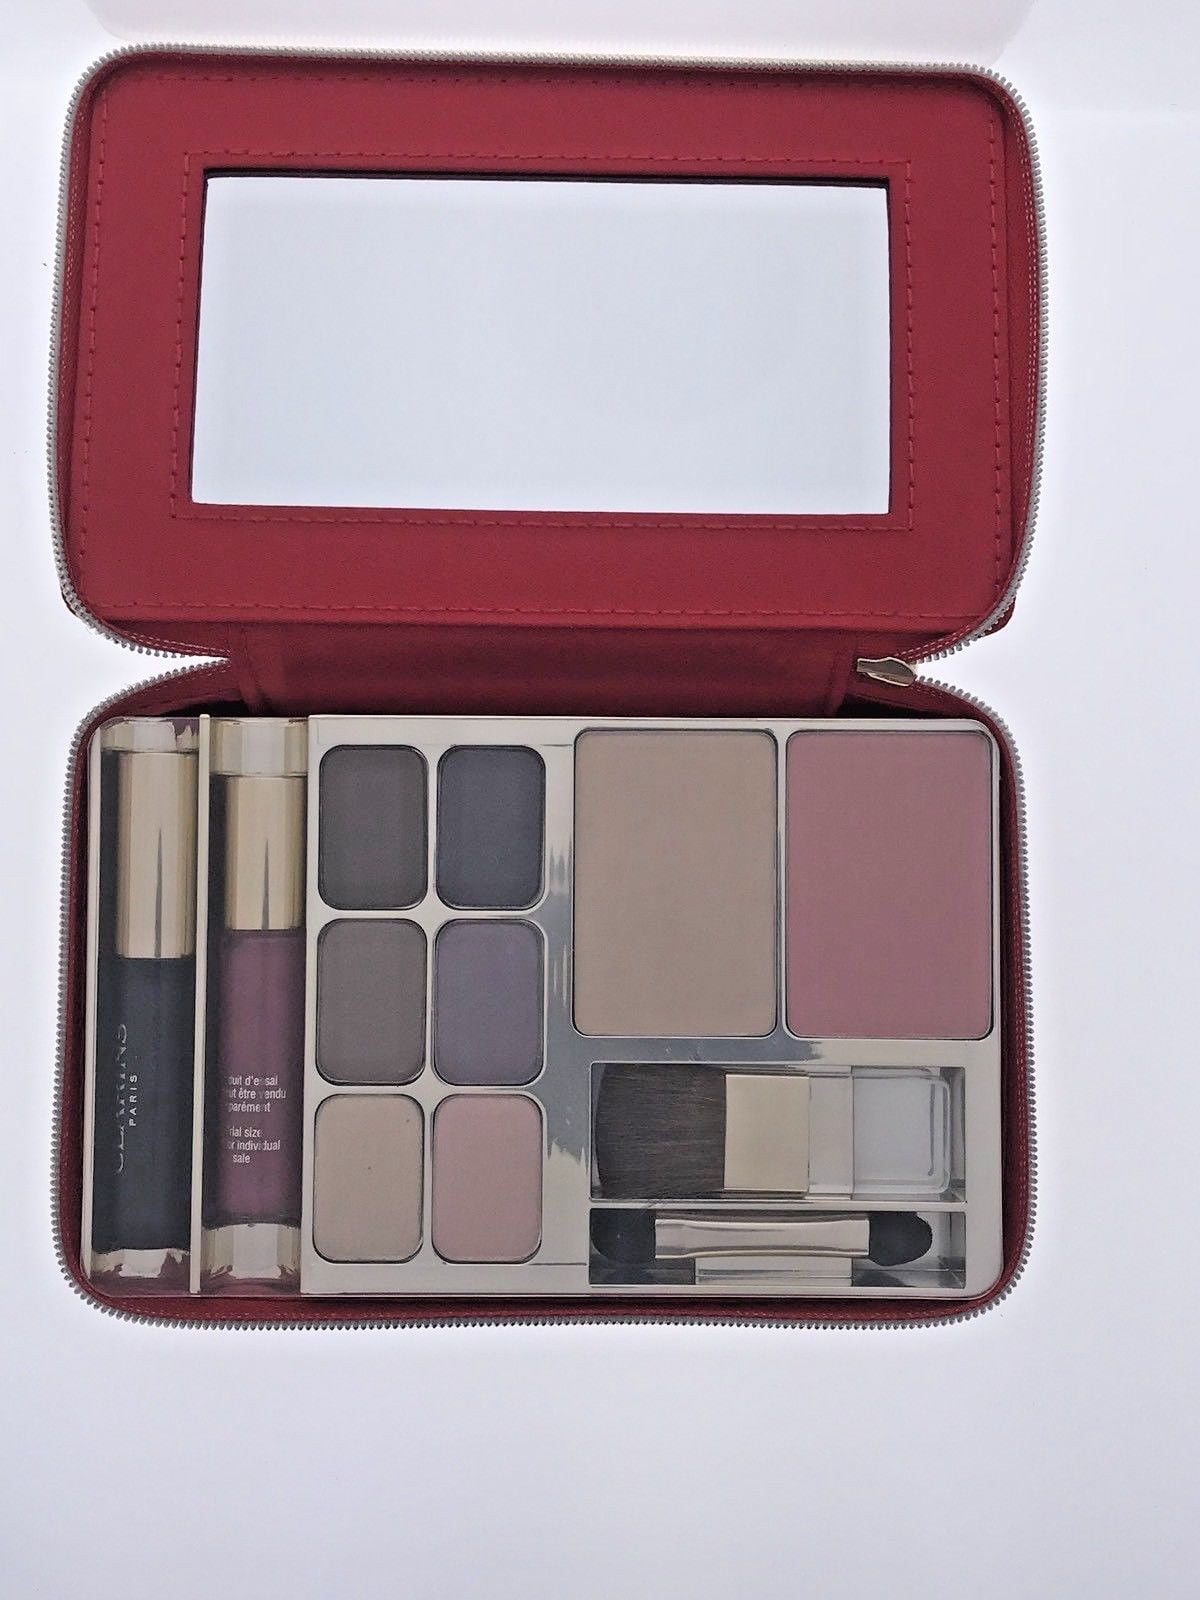 Clarins Make-Up Palette Travel Mascara Eyeshadow Blush Powder Compact - Walmart.com